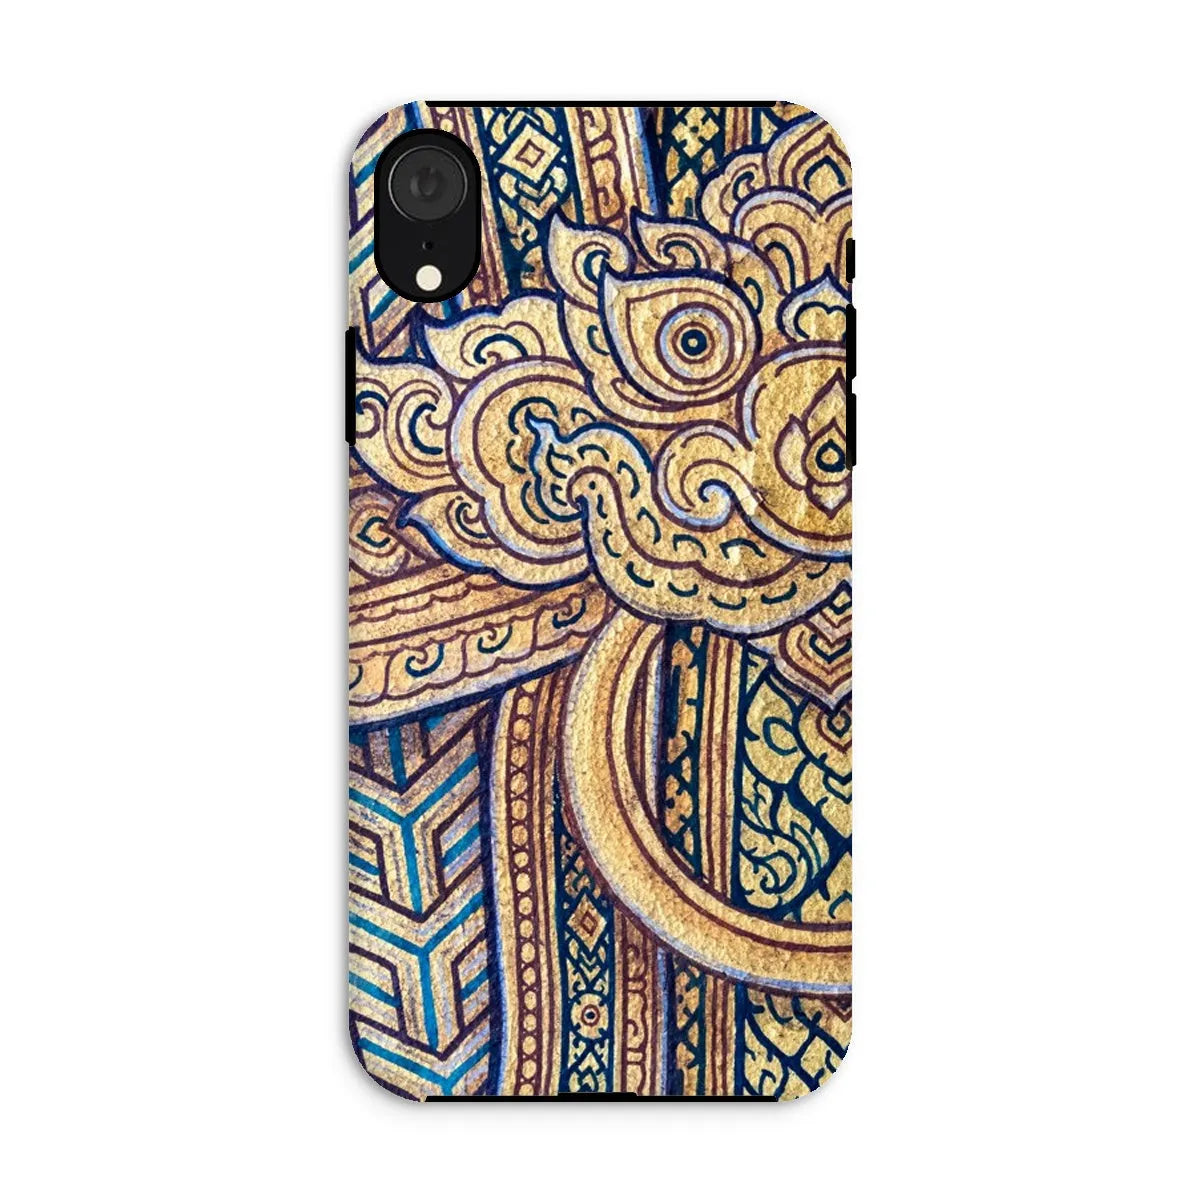 Man’s Best Friend - Thai Aesthetic Art Phone Case - Iphone Xr / Matte - Mobile Phone Cases - Aesthetic Art